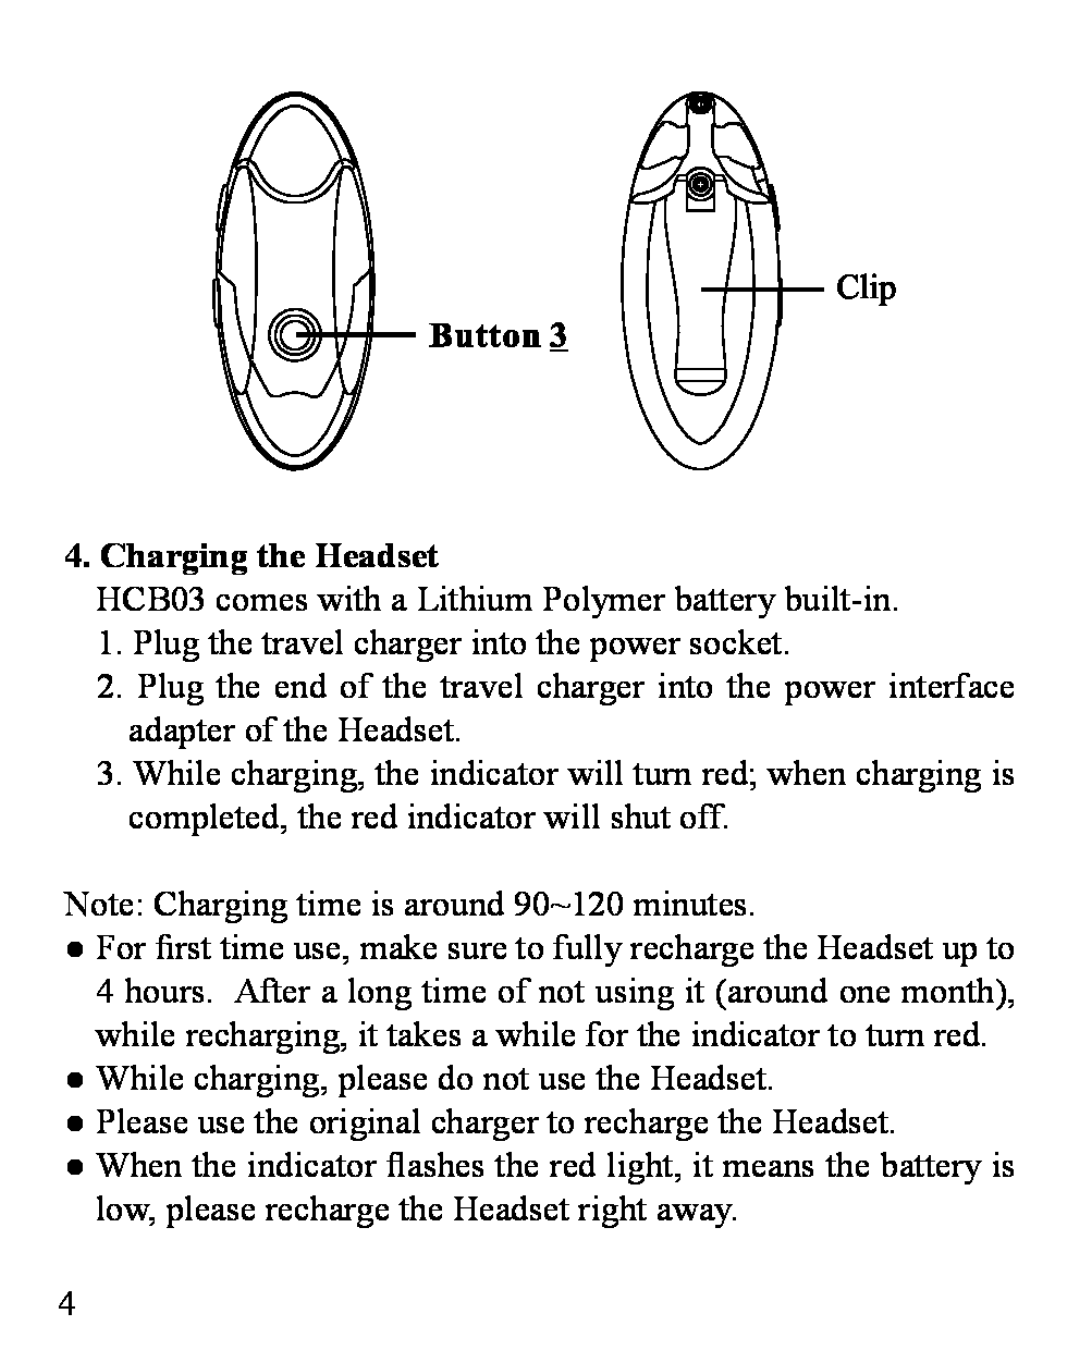 Huey Chiao HCB03 manual Charging the Headset 